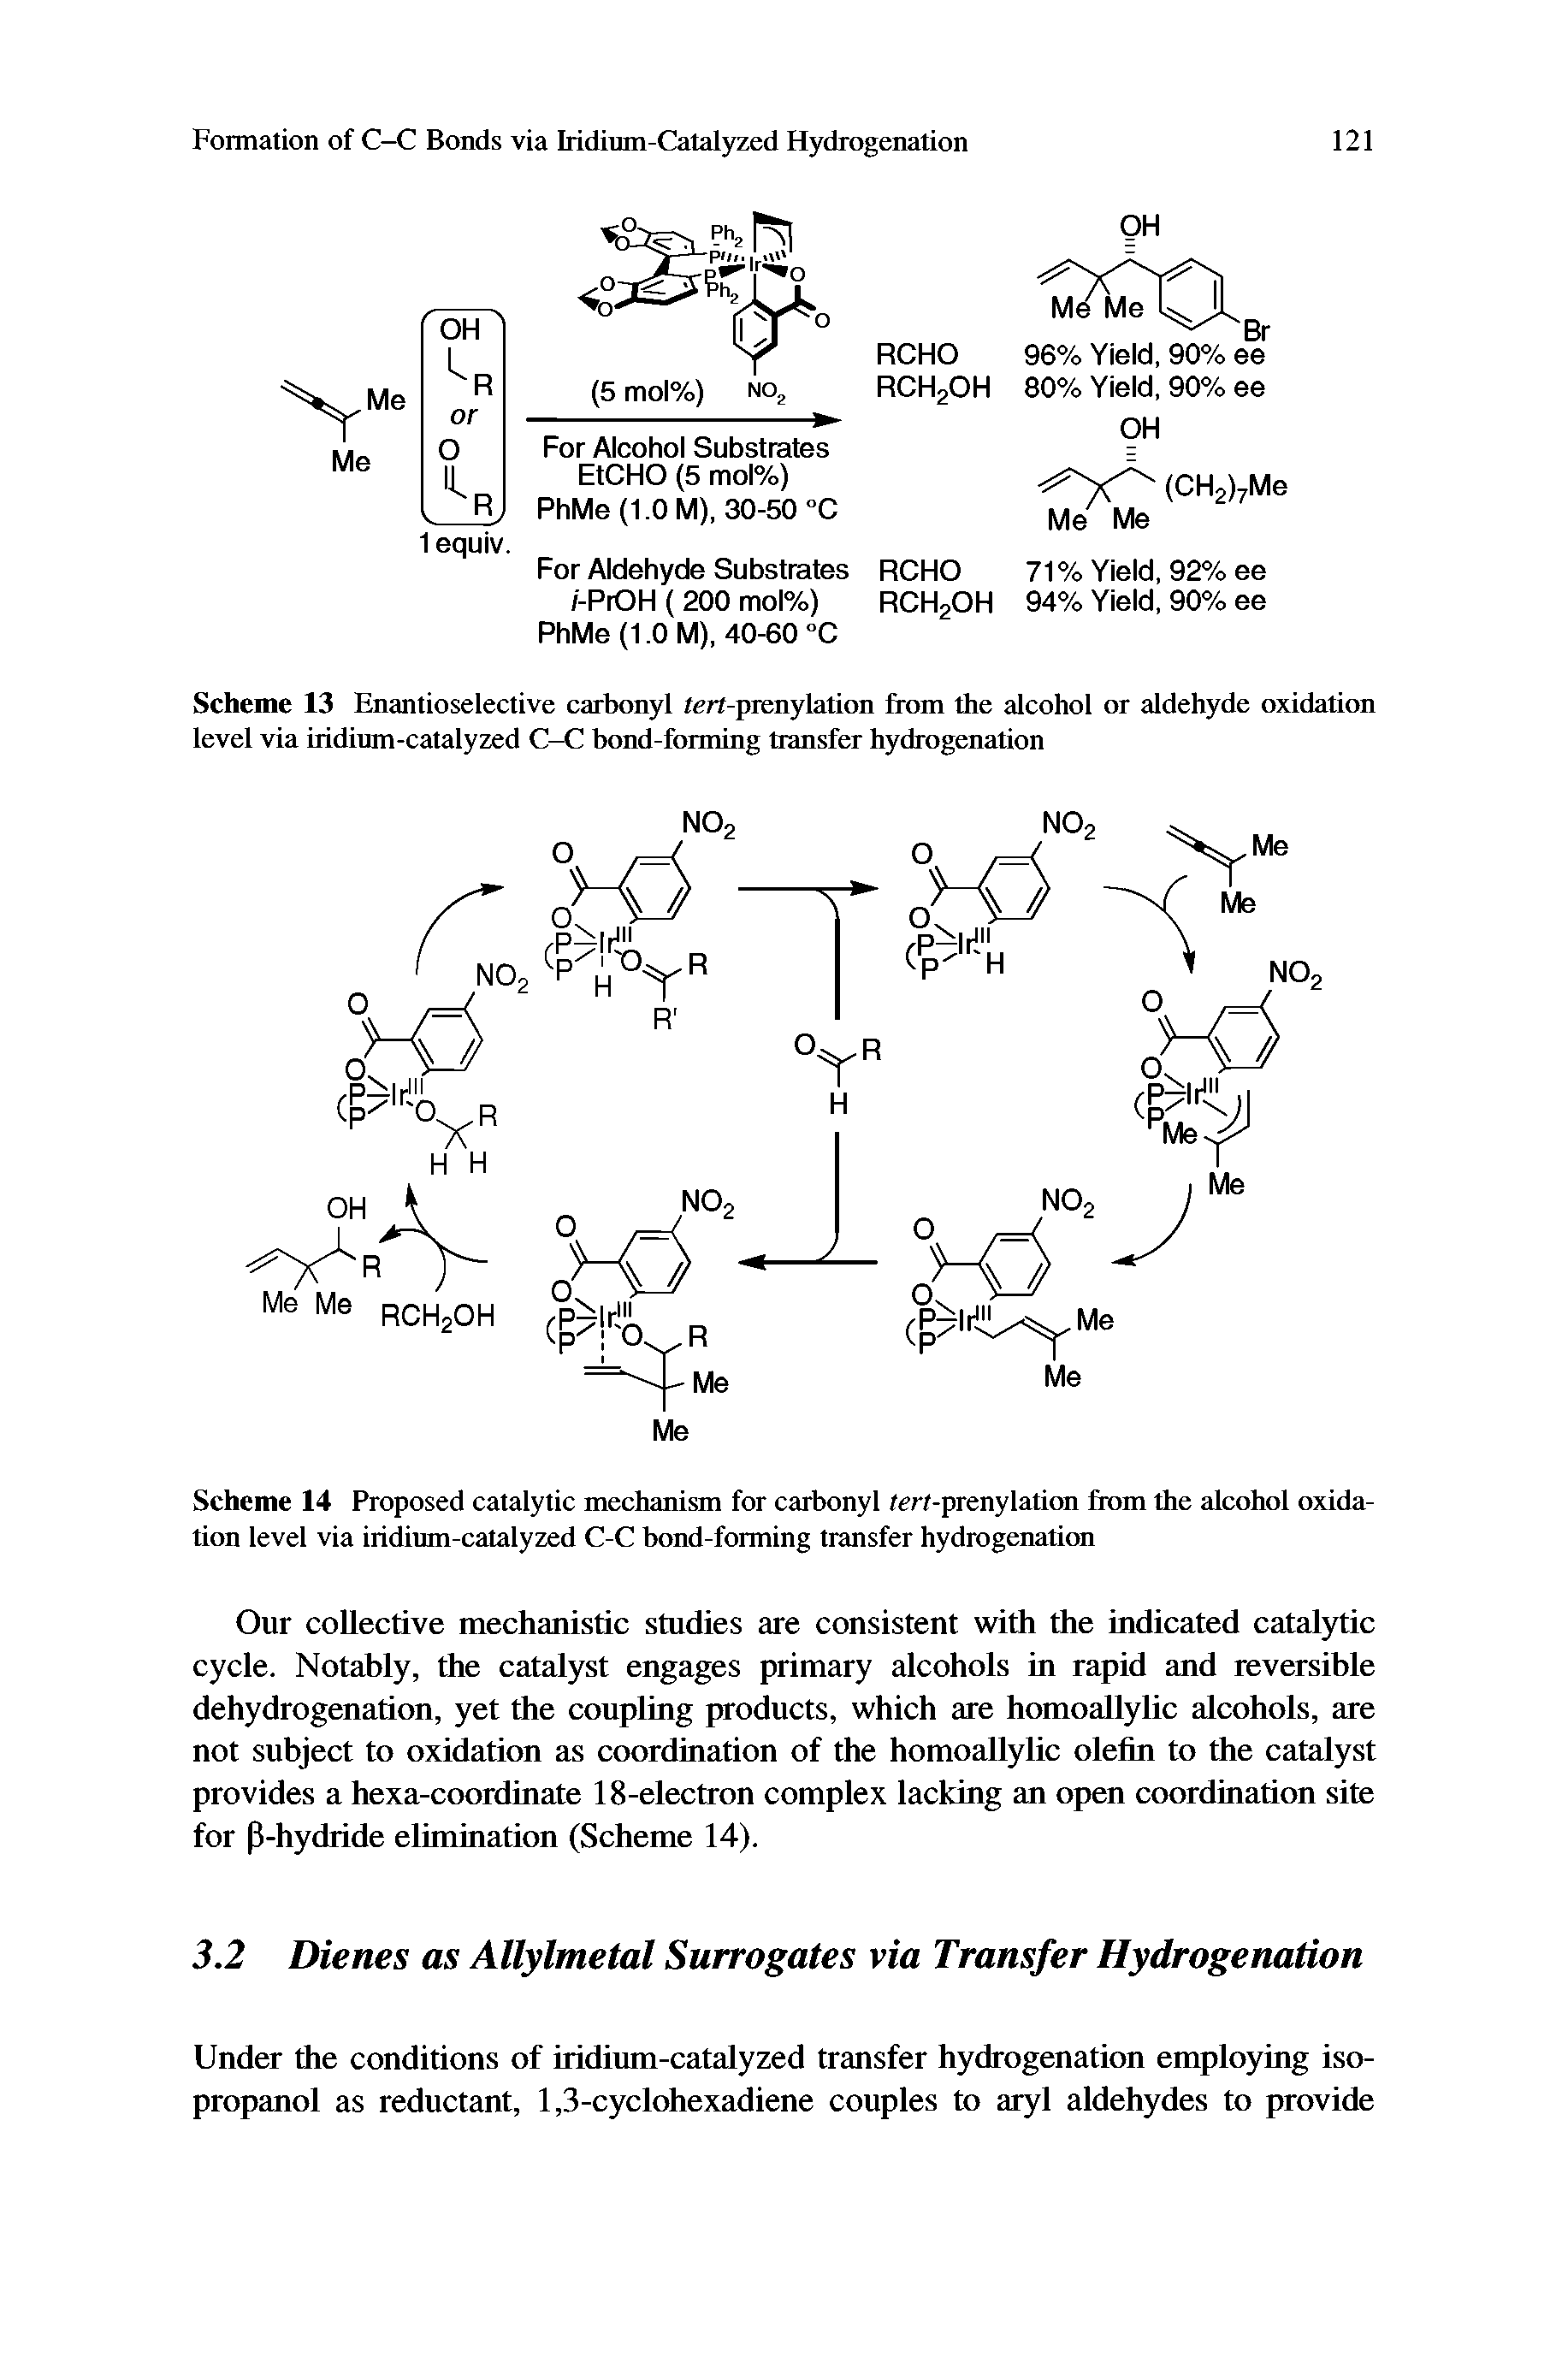 Scheme 13 Enantioselective carbonyl tert-prenylation from the alcohol or aldehyde oxidation level via iridium-catalyzed C-C bond-forming transfer hydrogenation...